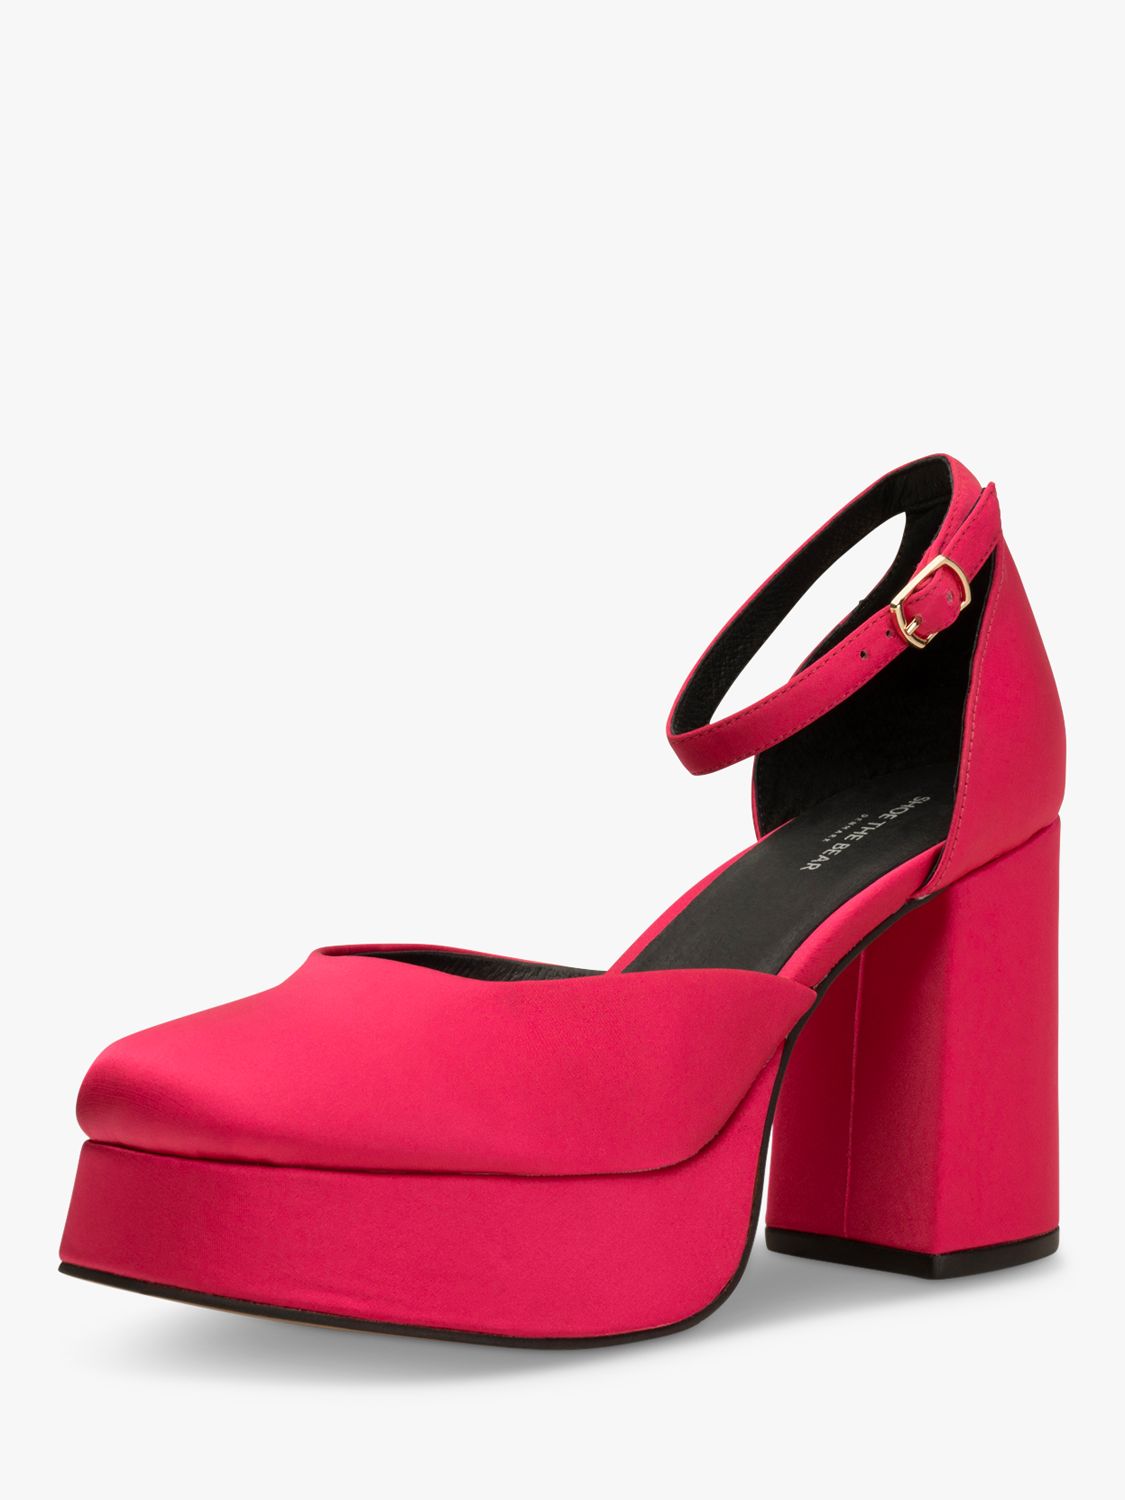 SHOE THE BEAR Priscilla Satin Platform Court Shoes, Pink at John Lewis ...